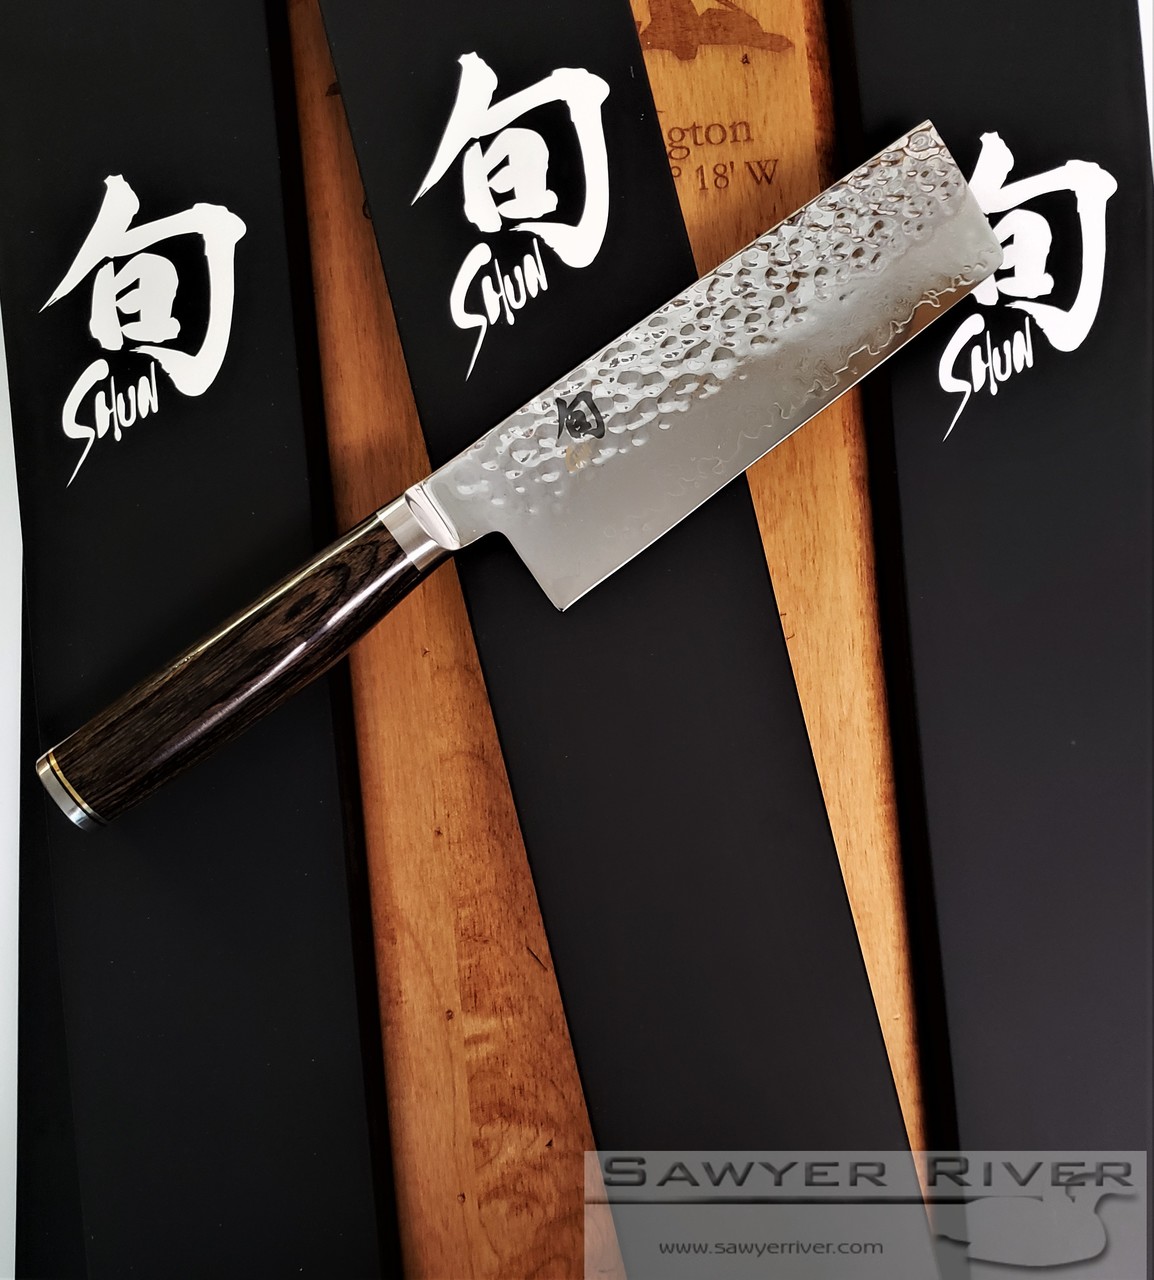 Shun Classic Nakiri Knife - 5 Hollow Edge